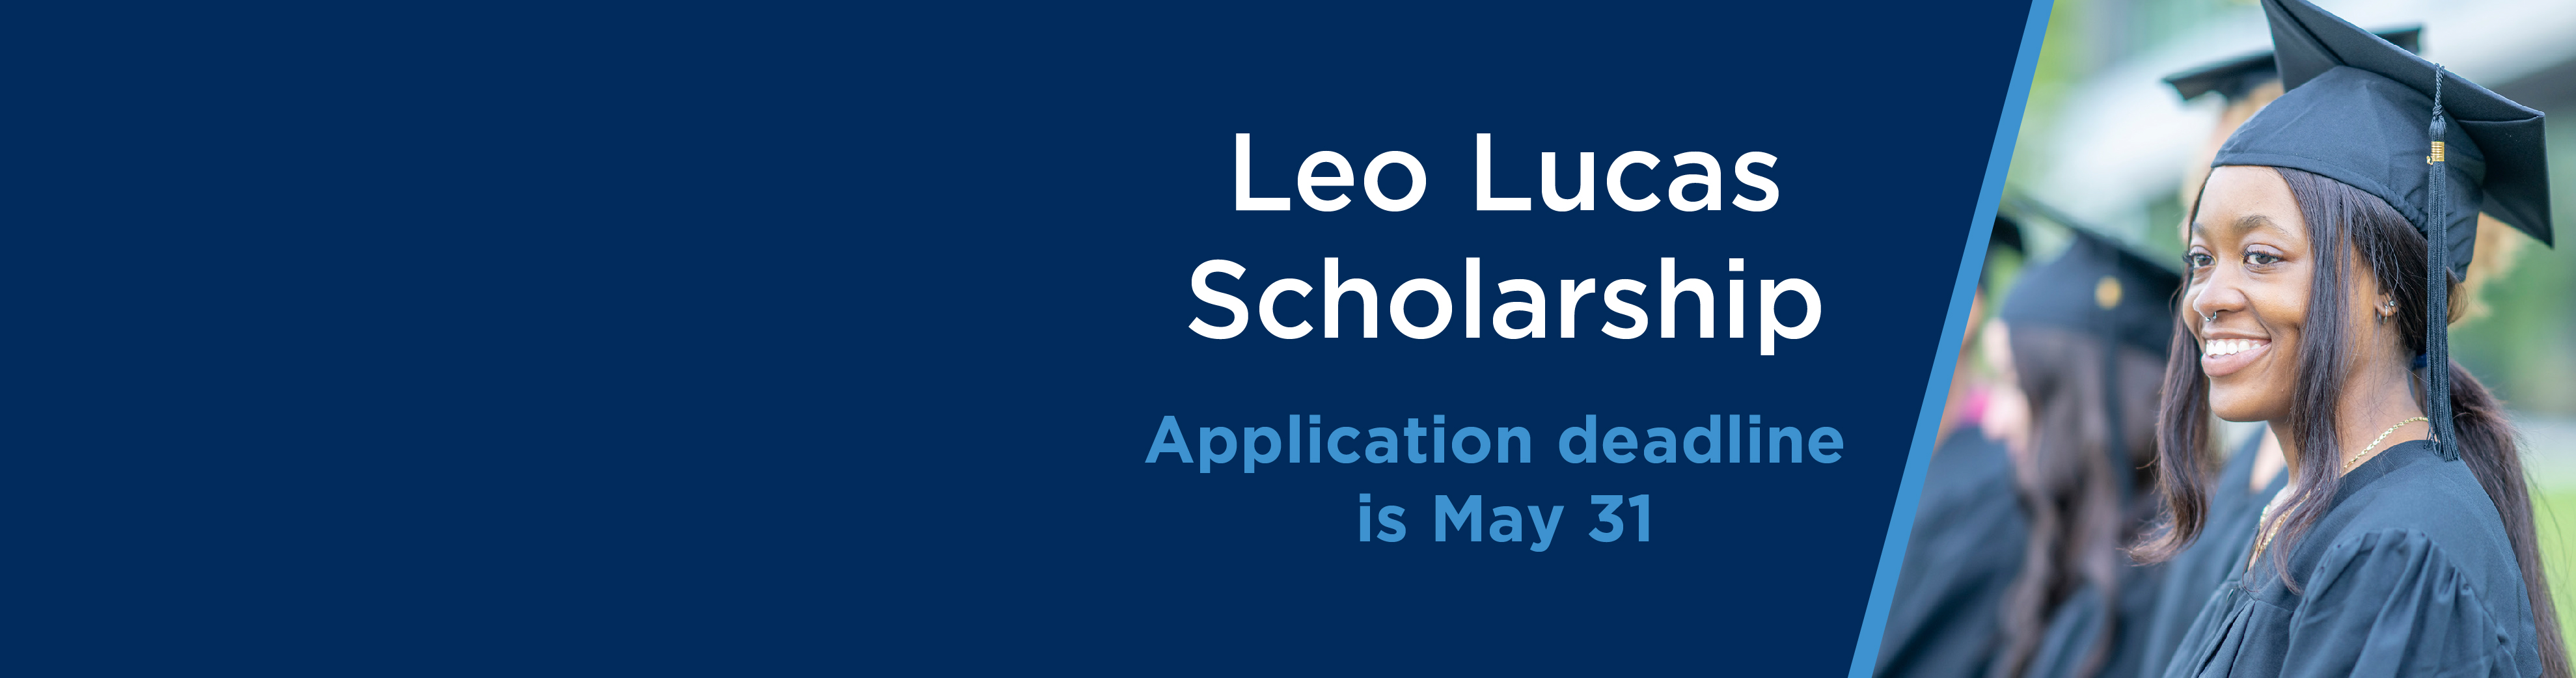 Graduating students - Leo Lucas Scholarship deadline is May 31